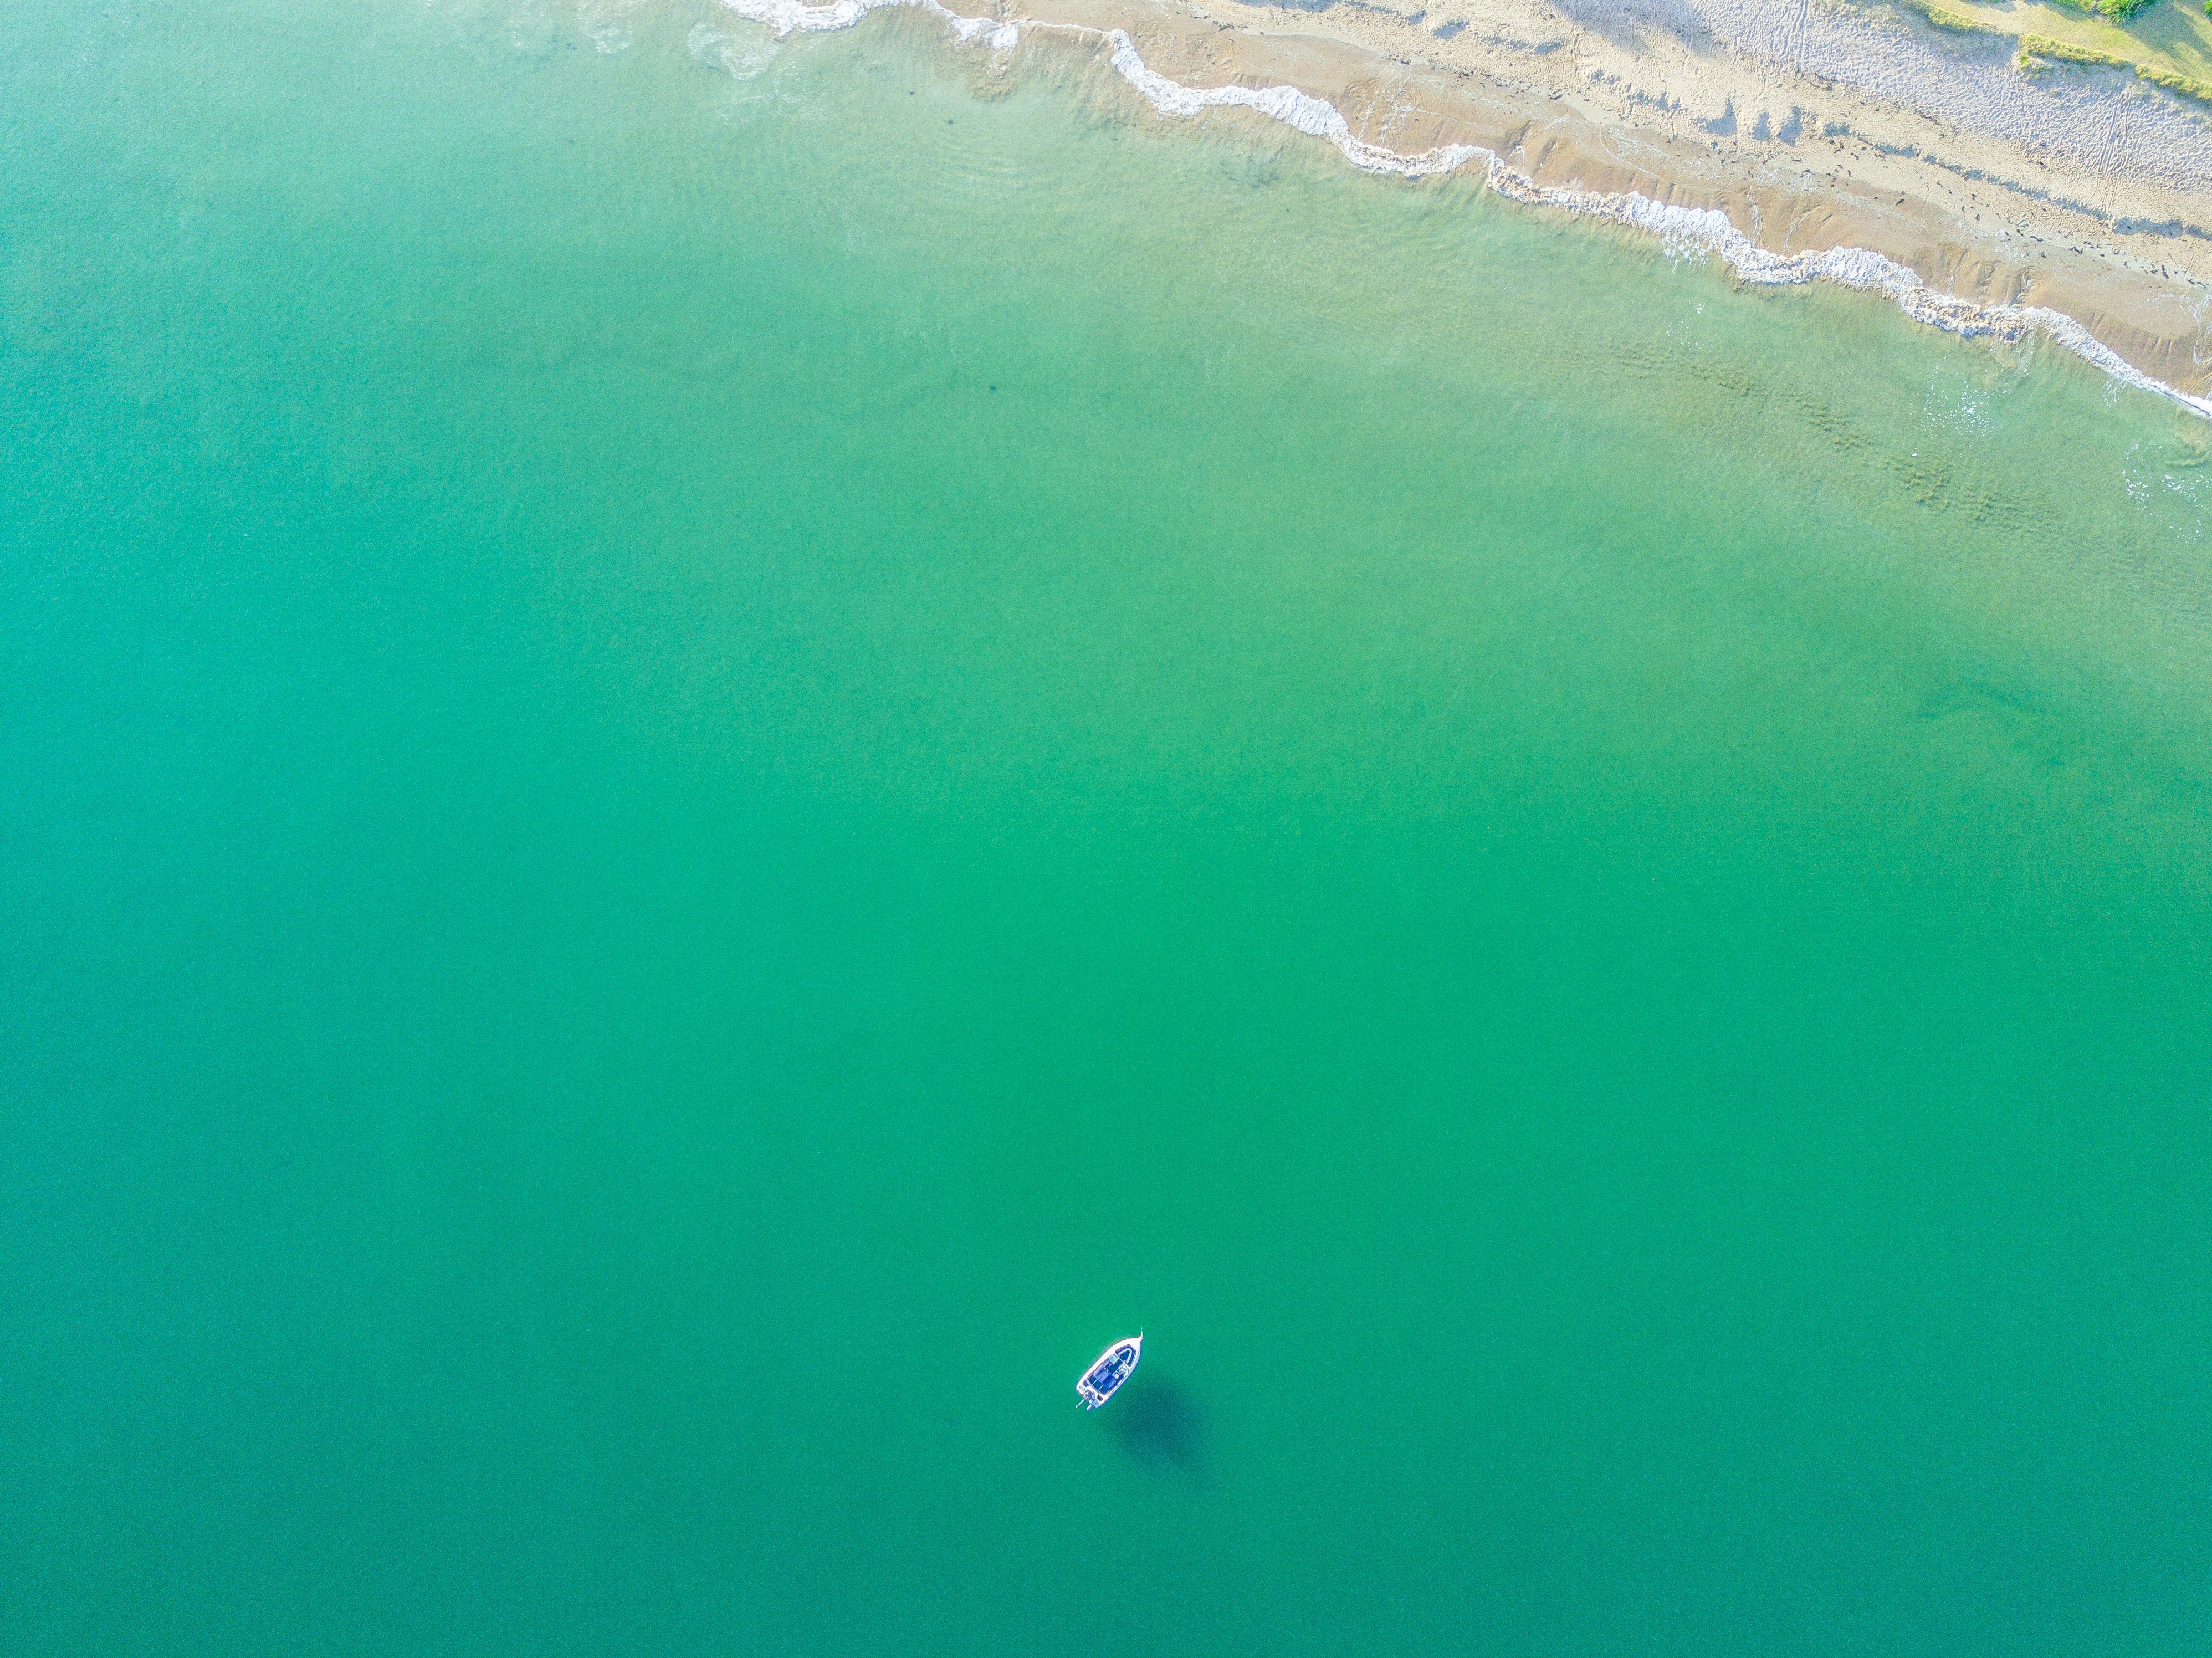 Drone view of boat in ocean